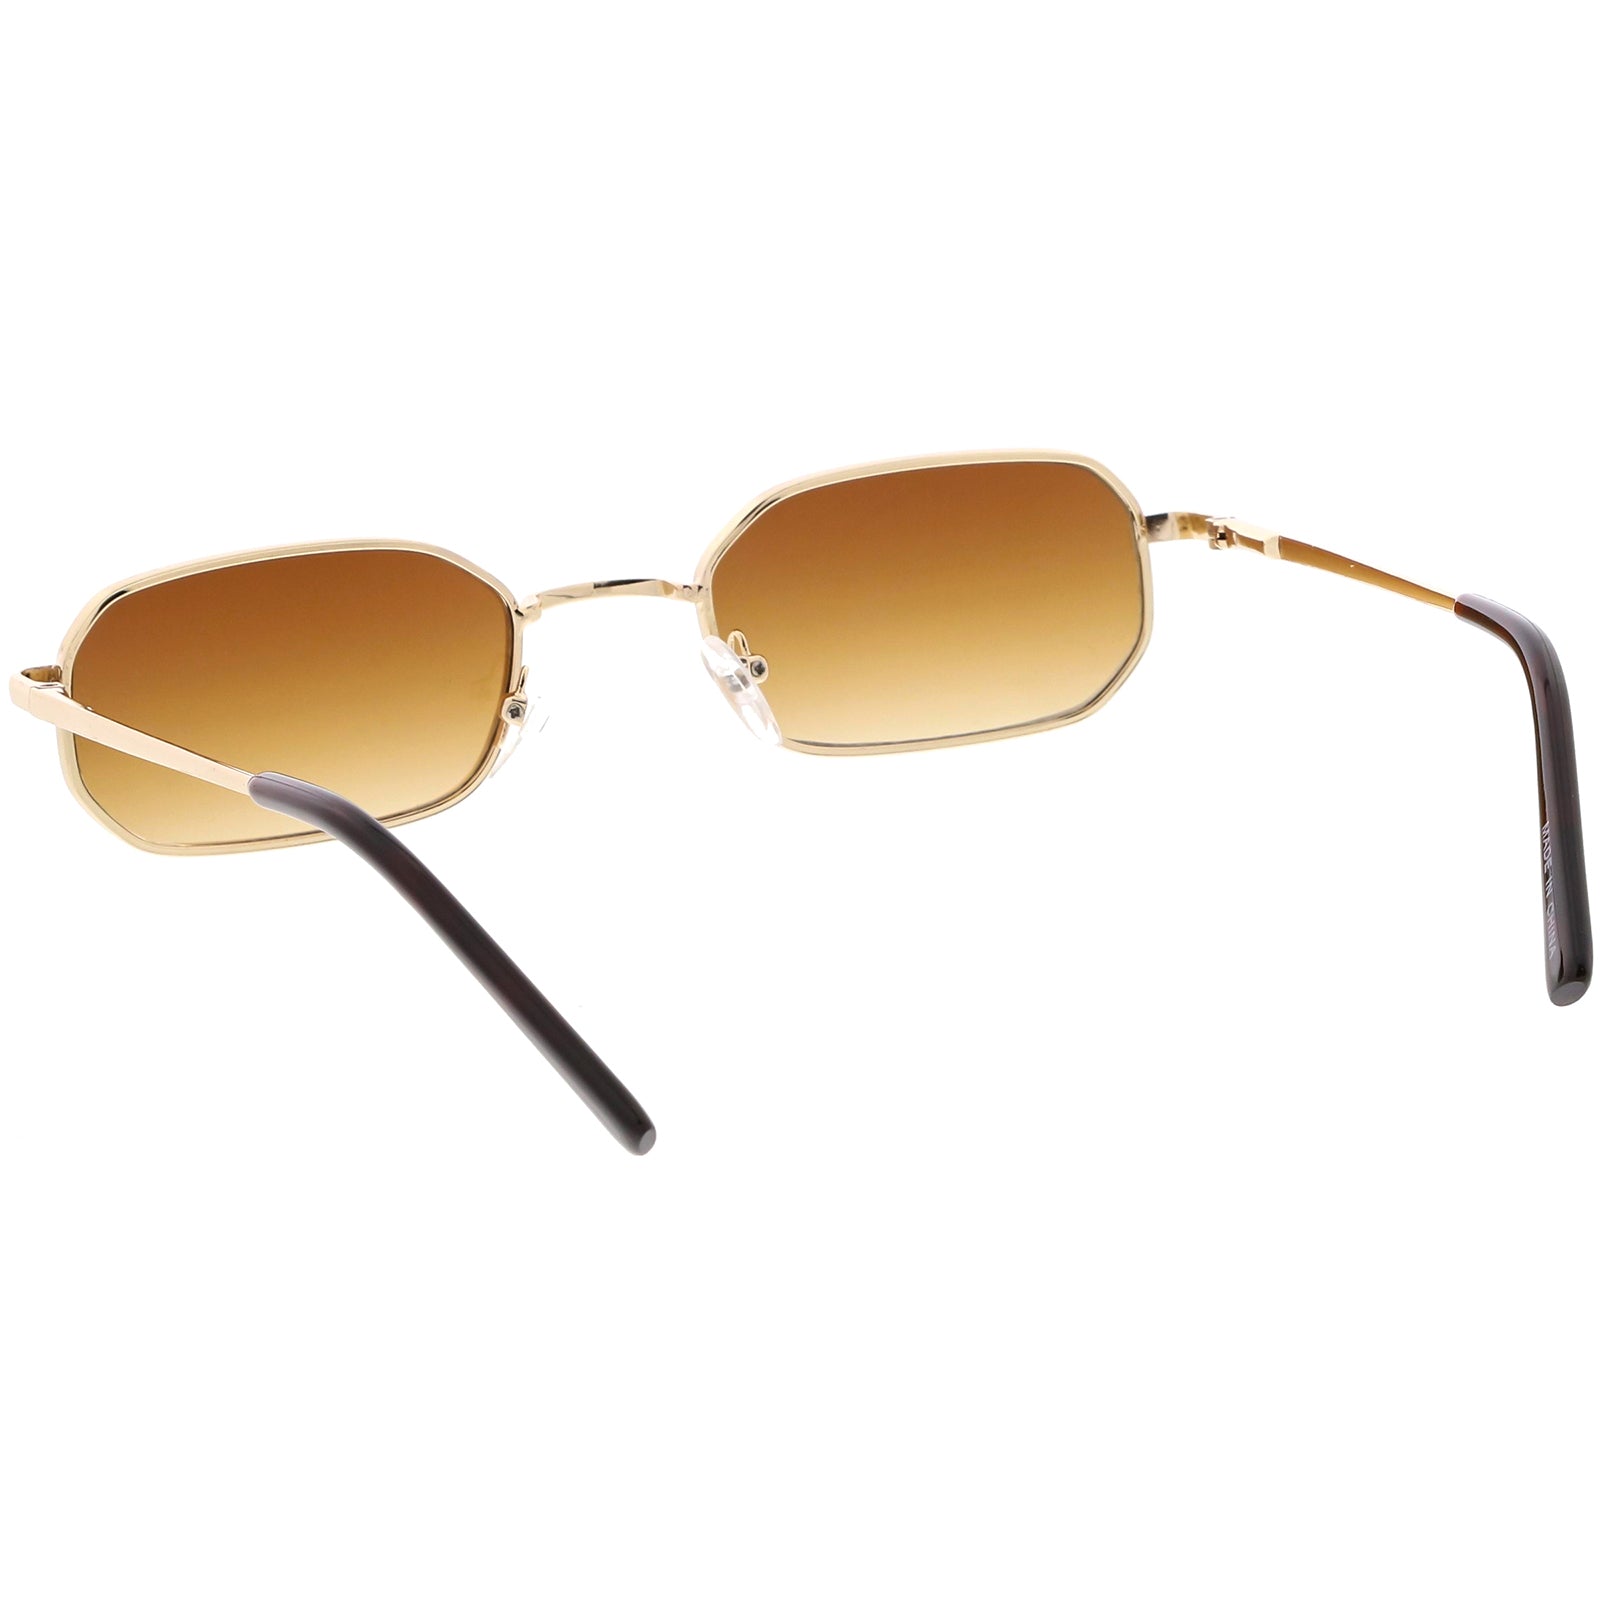 Thick Geek-Chic Geometric Tinted Sunglasses